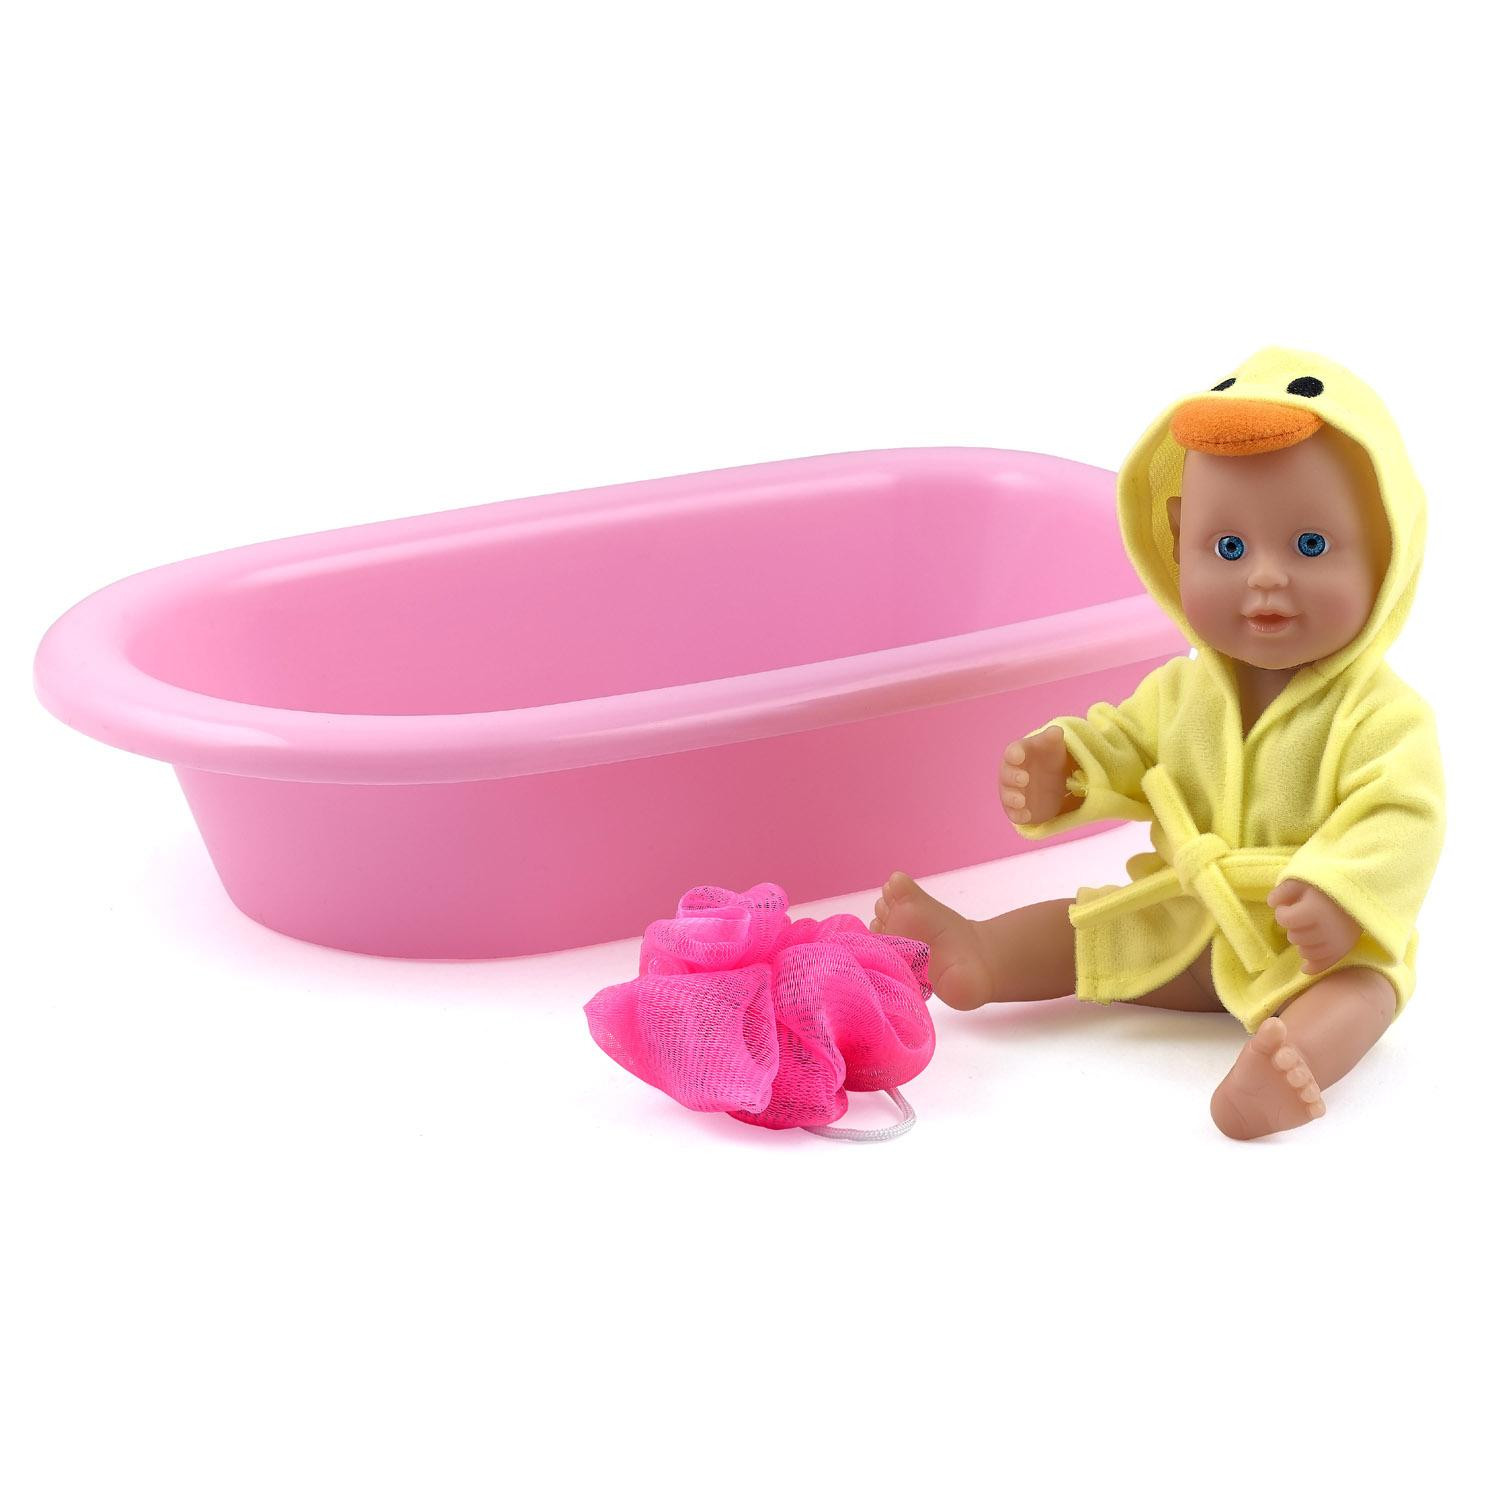 Best ideas about Baby Doll Bathroom
. Save or Pin Dolls World Bathtime Bathable Vinyl Bath Baby Doll Set Now.